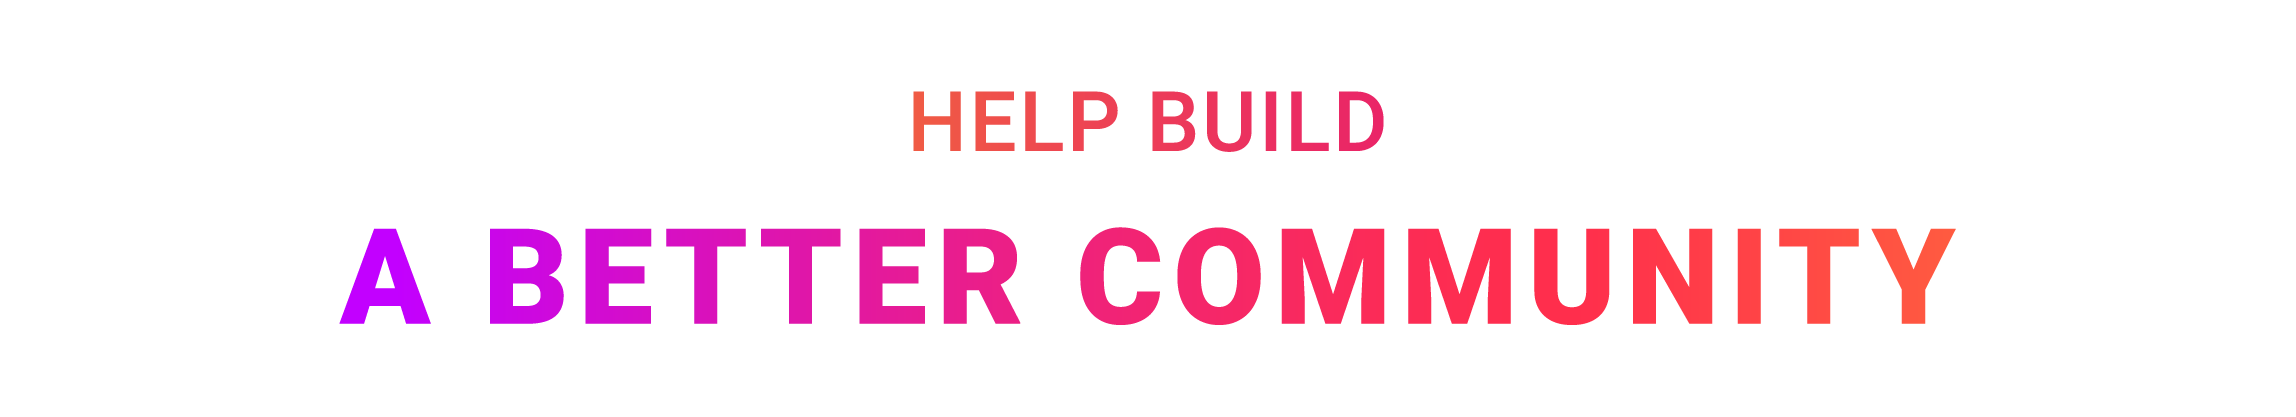 Help-build-a-better-community